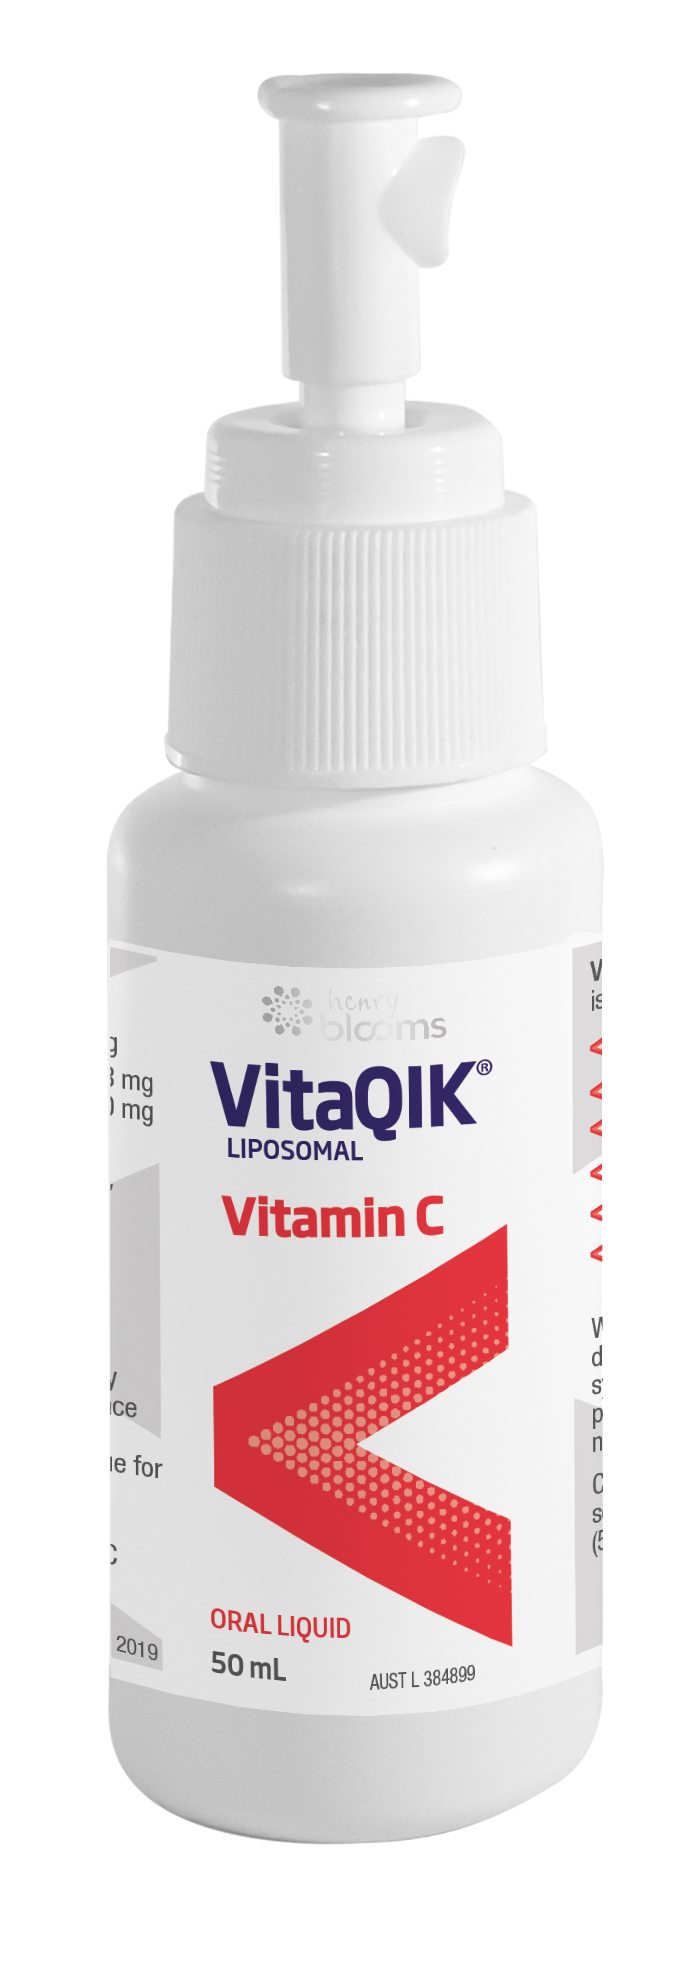 Henry Blooms VitaQIK Liposomal Vitamin C 50ml